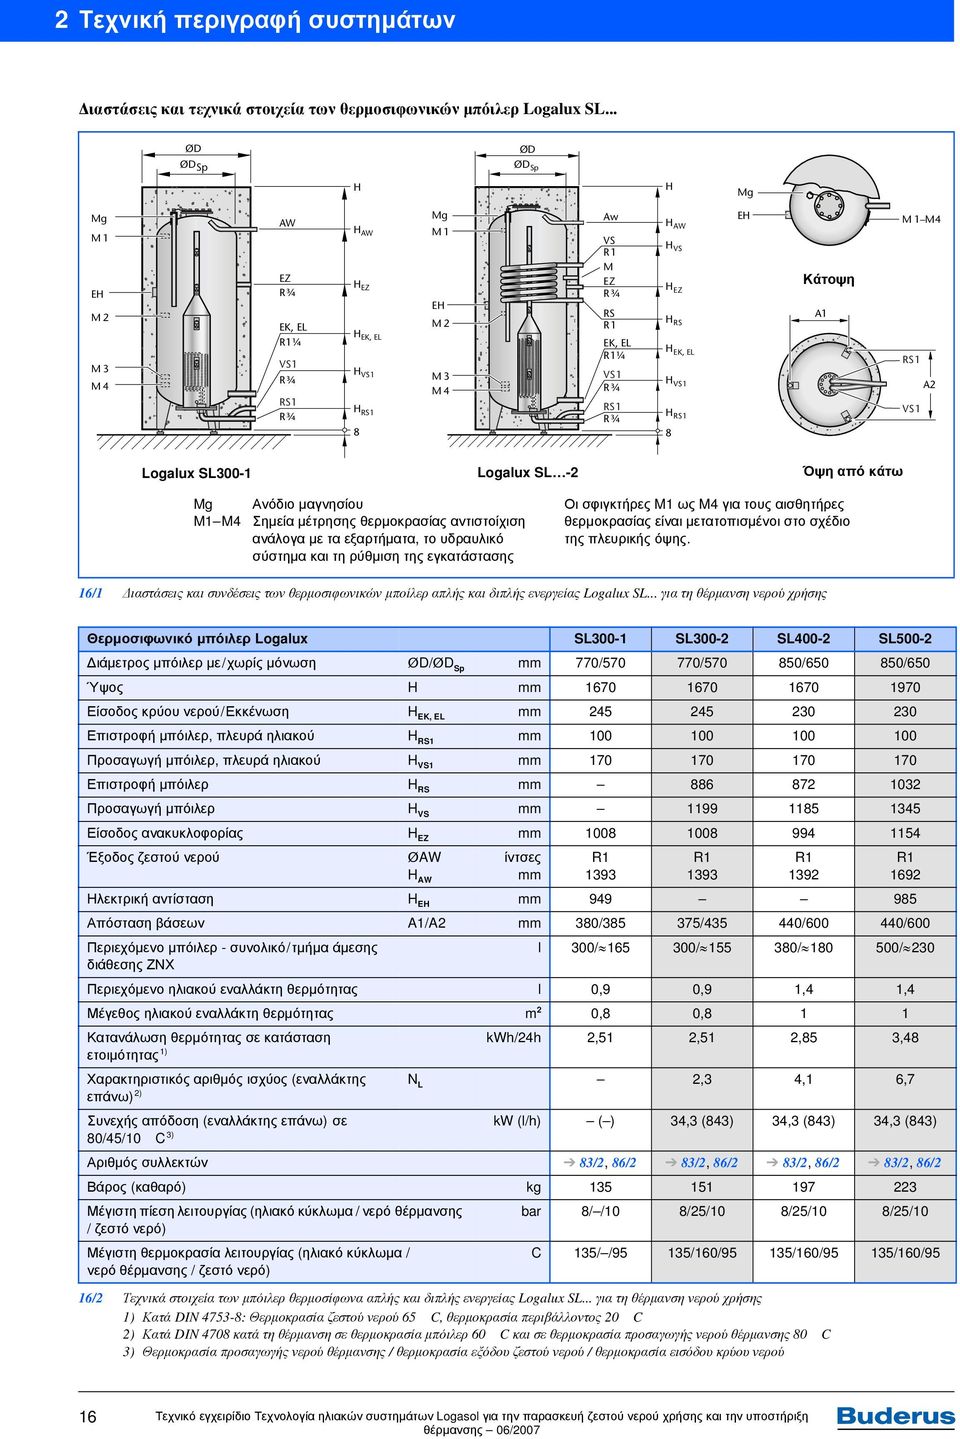 H RS 8 EH Κάτοψη A M M4 RS A VS Logalux SL300- Logalux SL - Όψη από κάτω Mg M M4 Ανόδιο μαγνησίου Σημεία μέτρησης θερμοκρασίας αντιστοίχιση ανάλογα με τα εξαρτήματα, το υδραυλικό σύστημα και τη